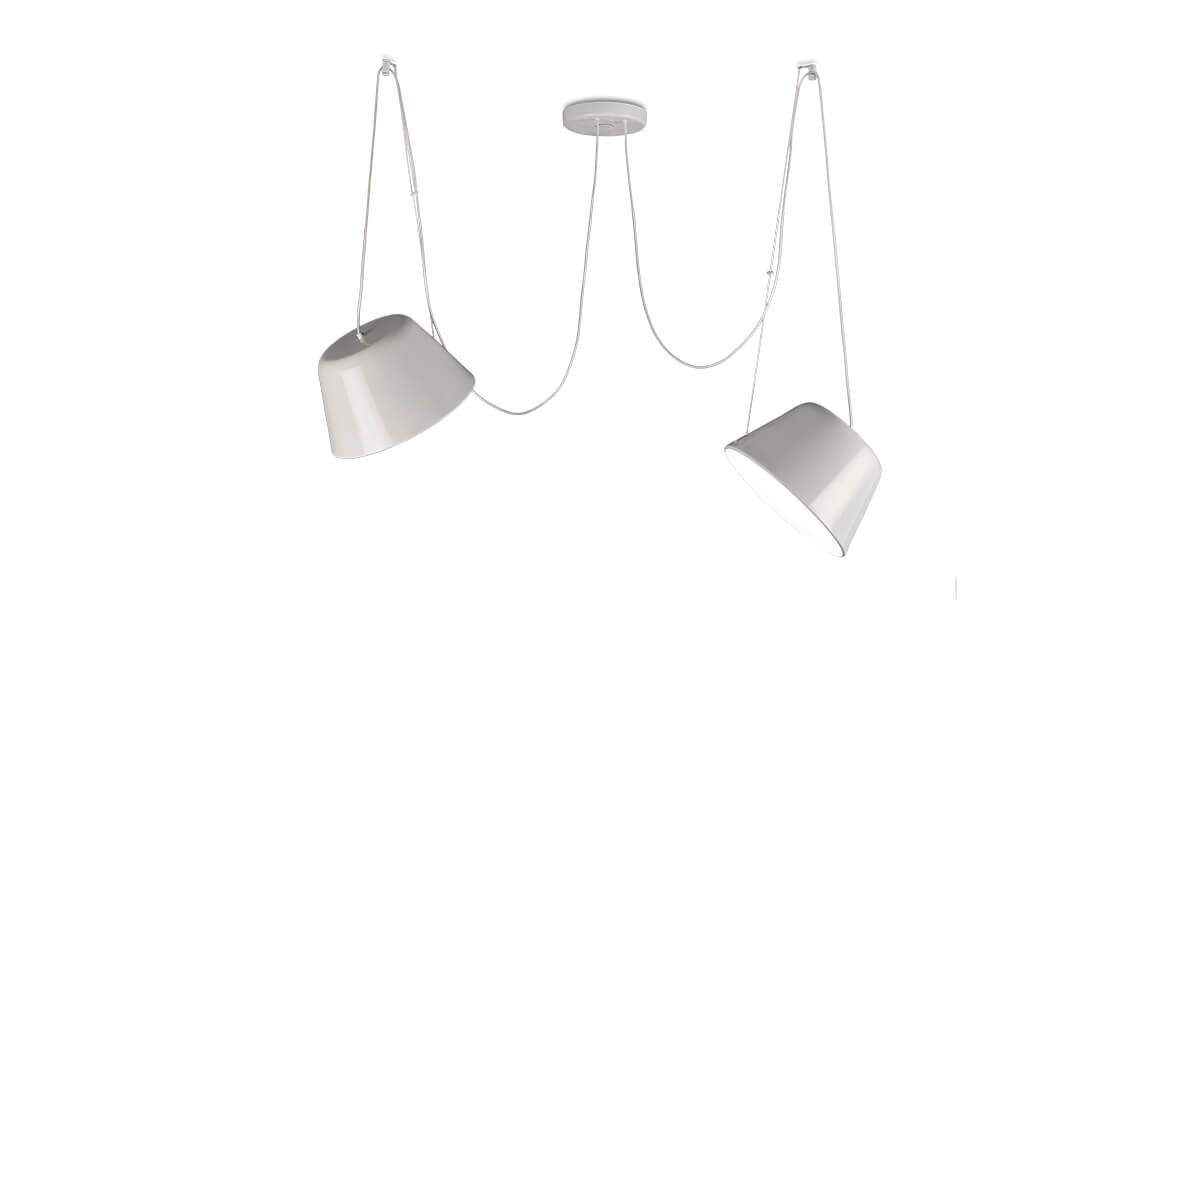 SENTO – Suspension 2 lampshades | Ø31 cm